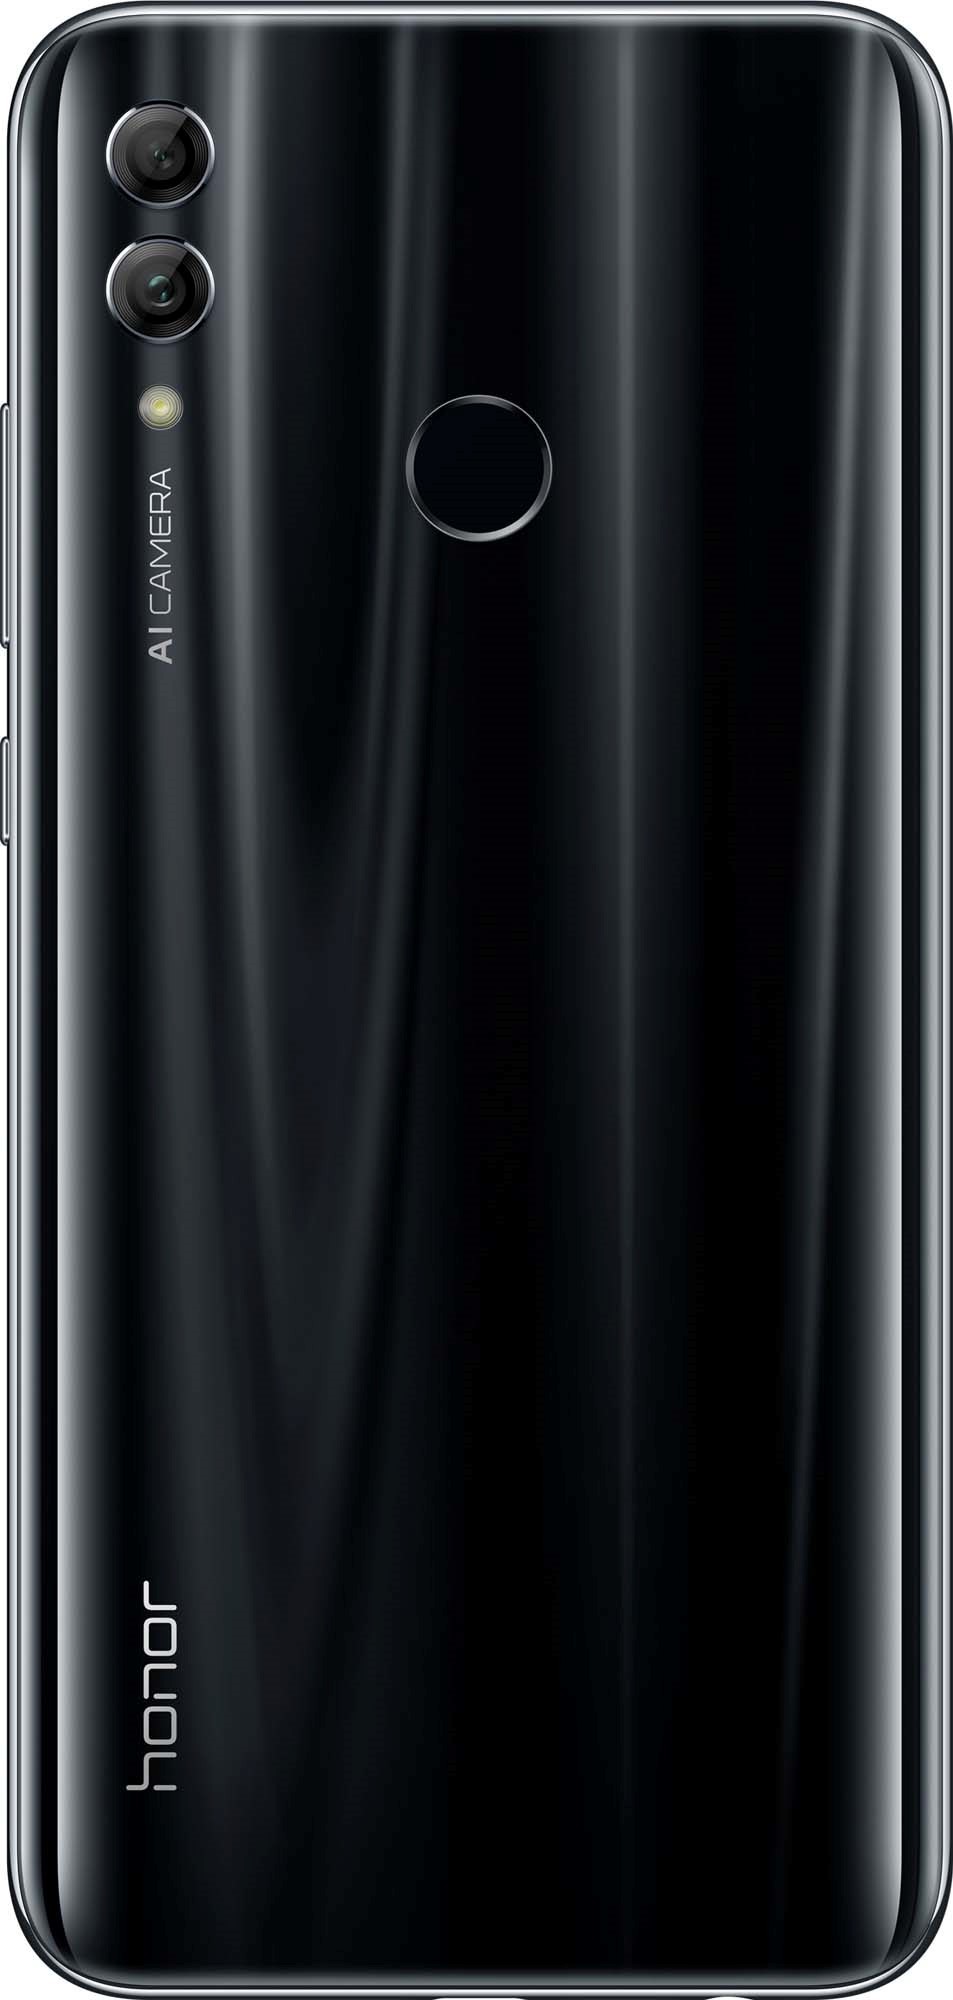 Смартфон Honor 10 Lite 4/64GB Черный